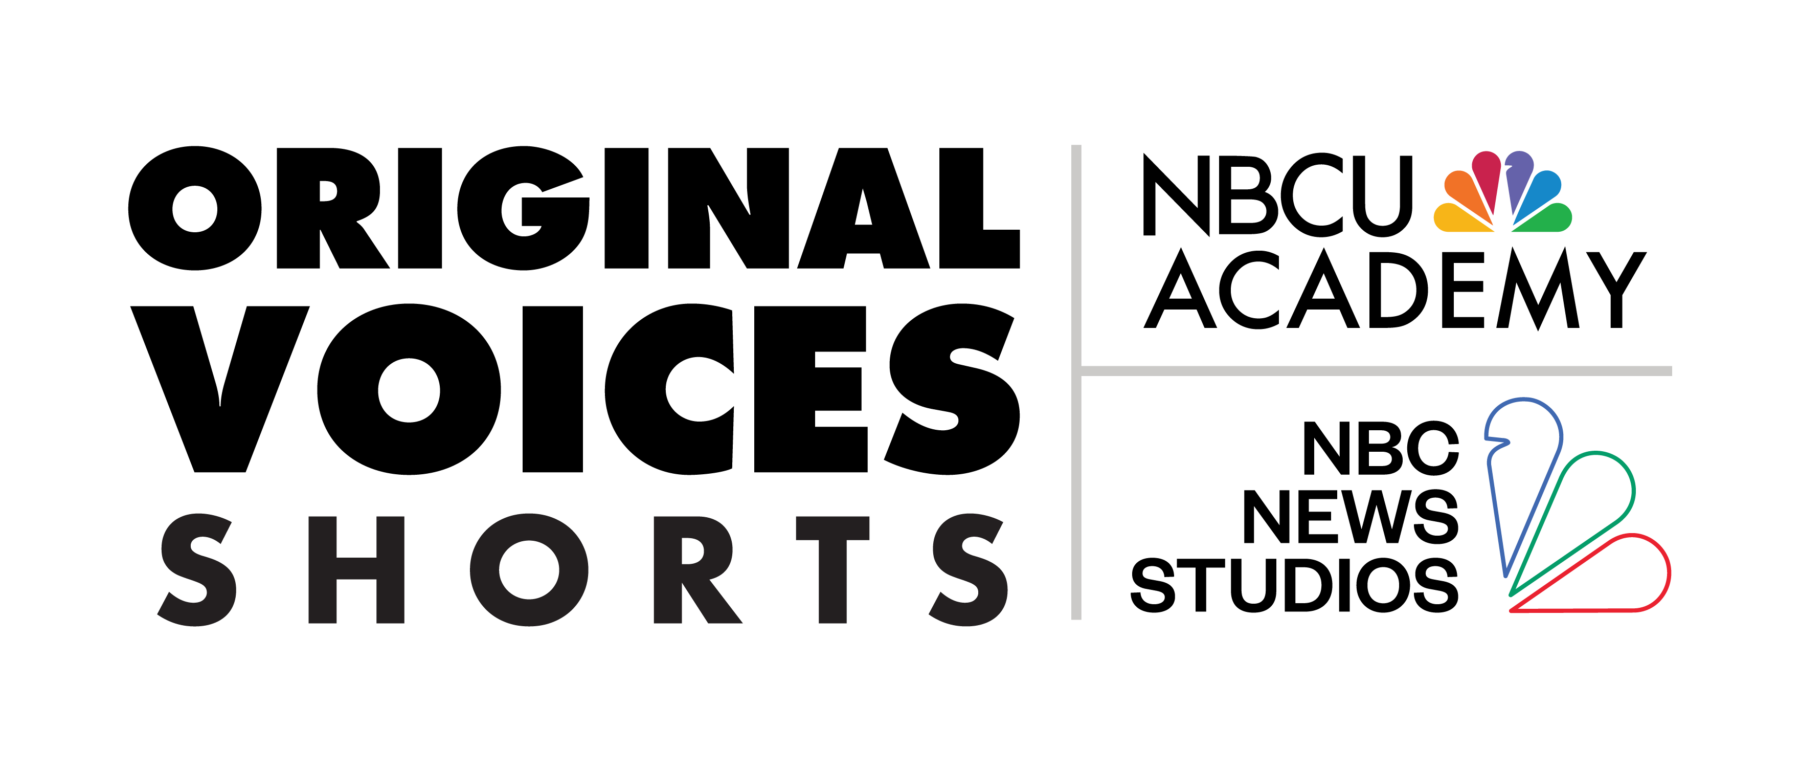 Original Voices Shorts | NBCU Academy | NBC News Studios